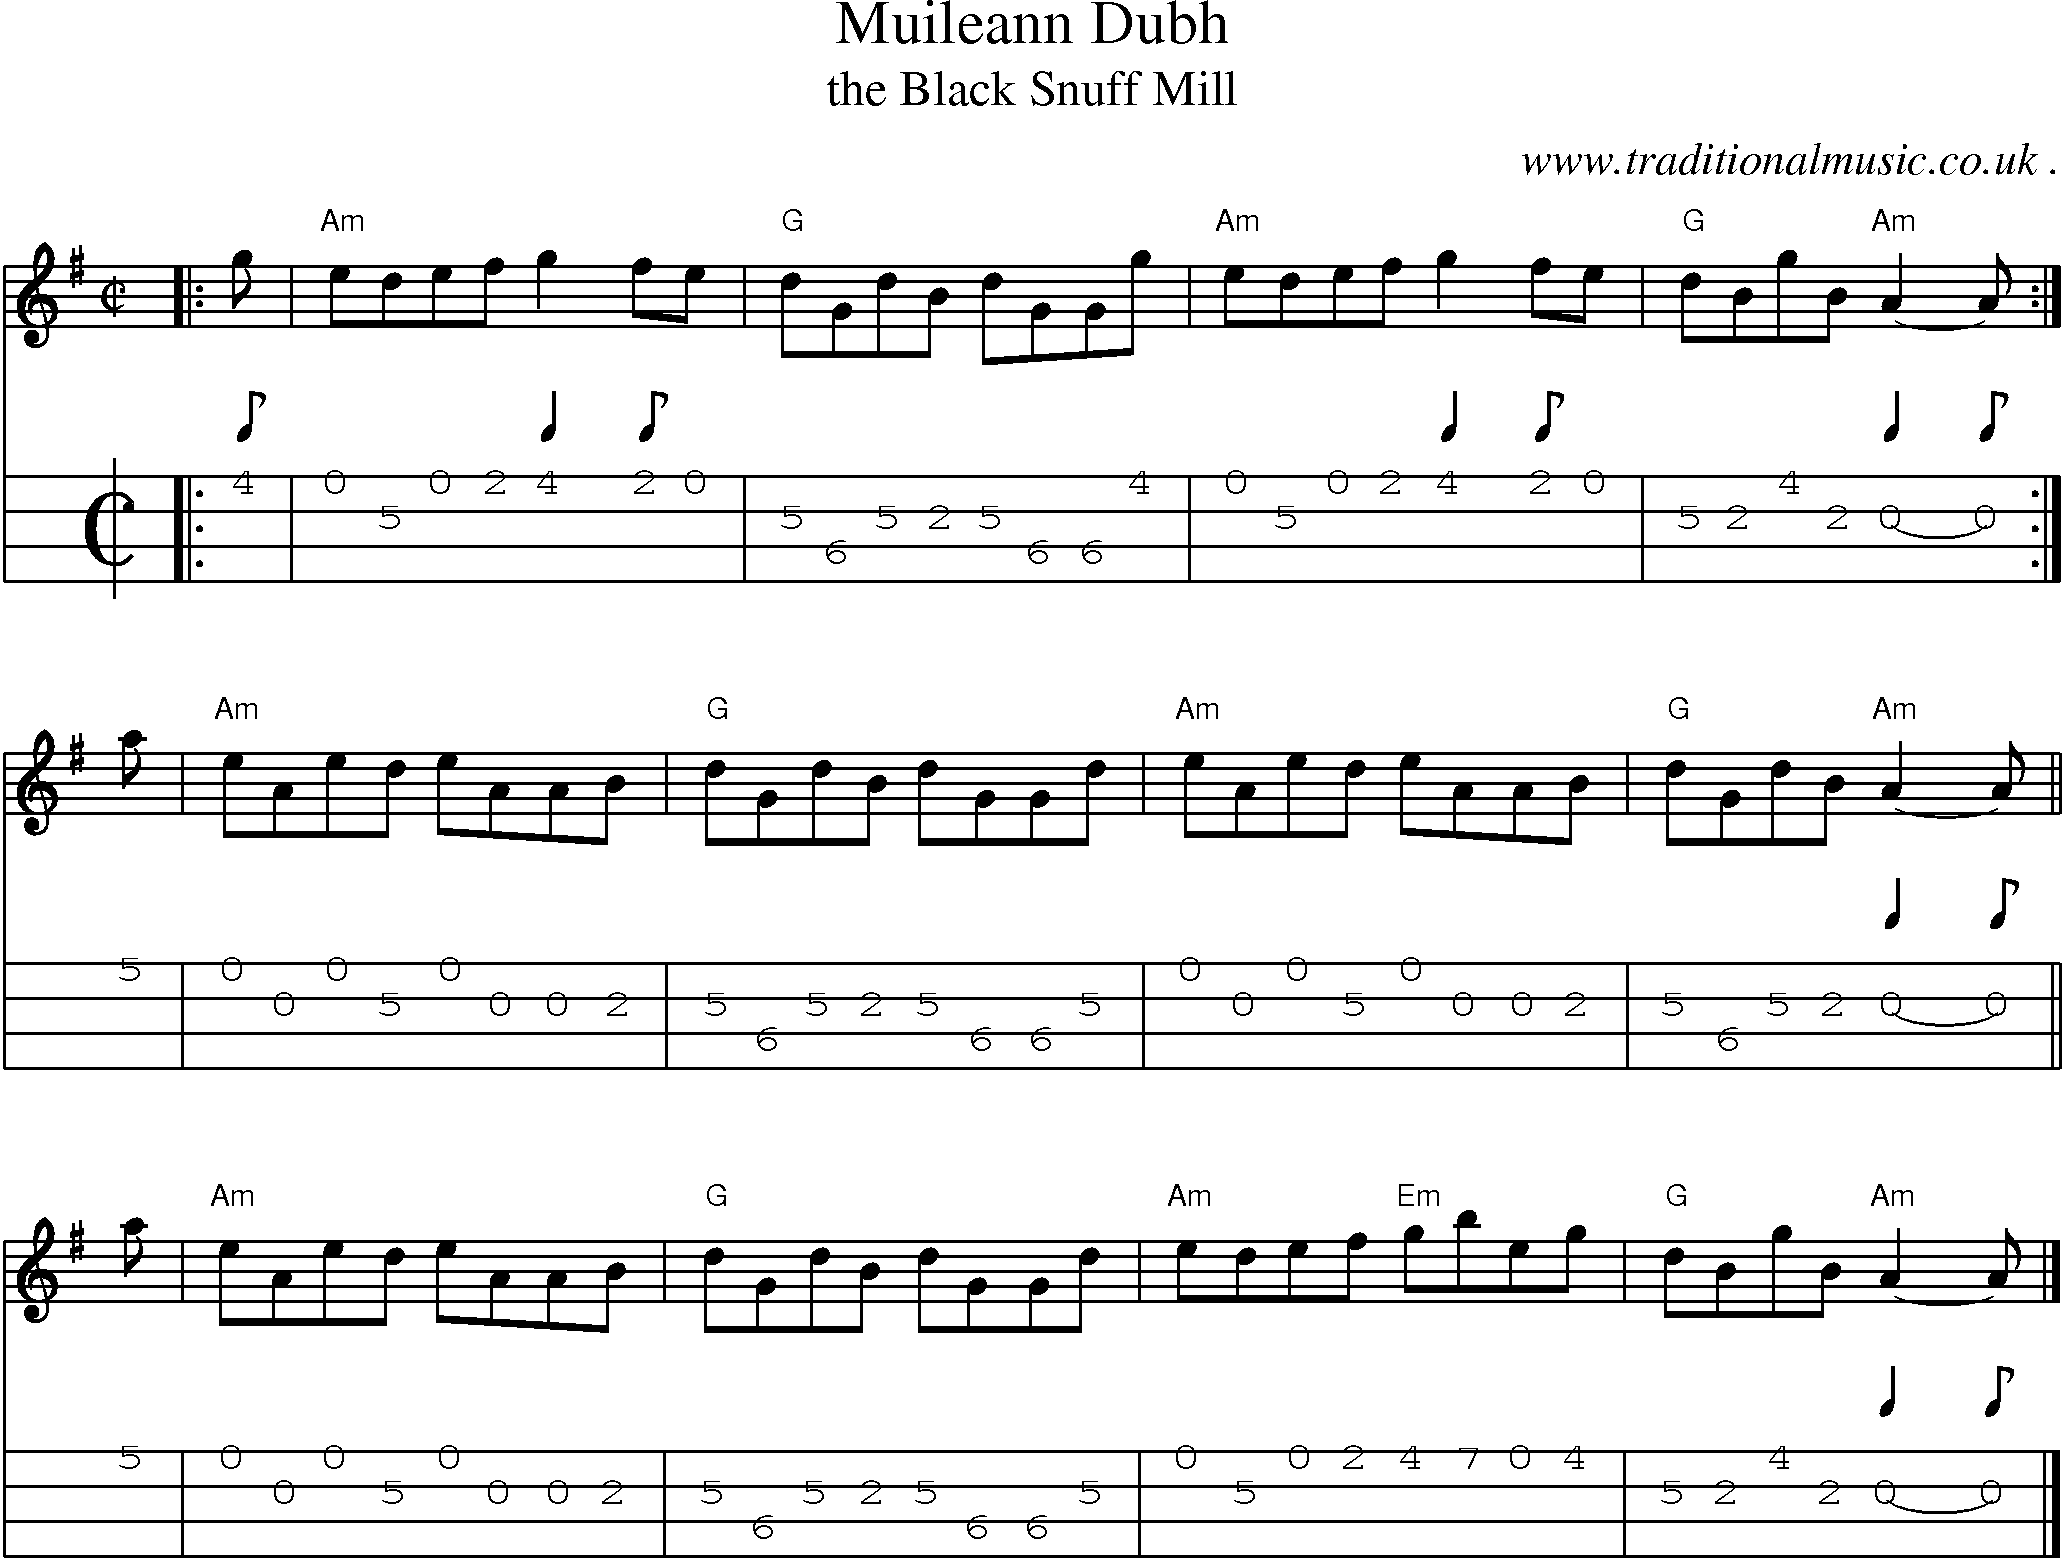 Sheet-music  score, Chords and Mandolin Tabs for Muileann Dubh